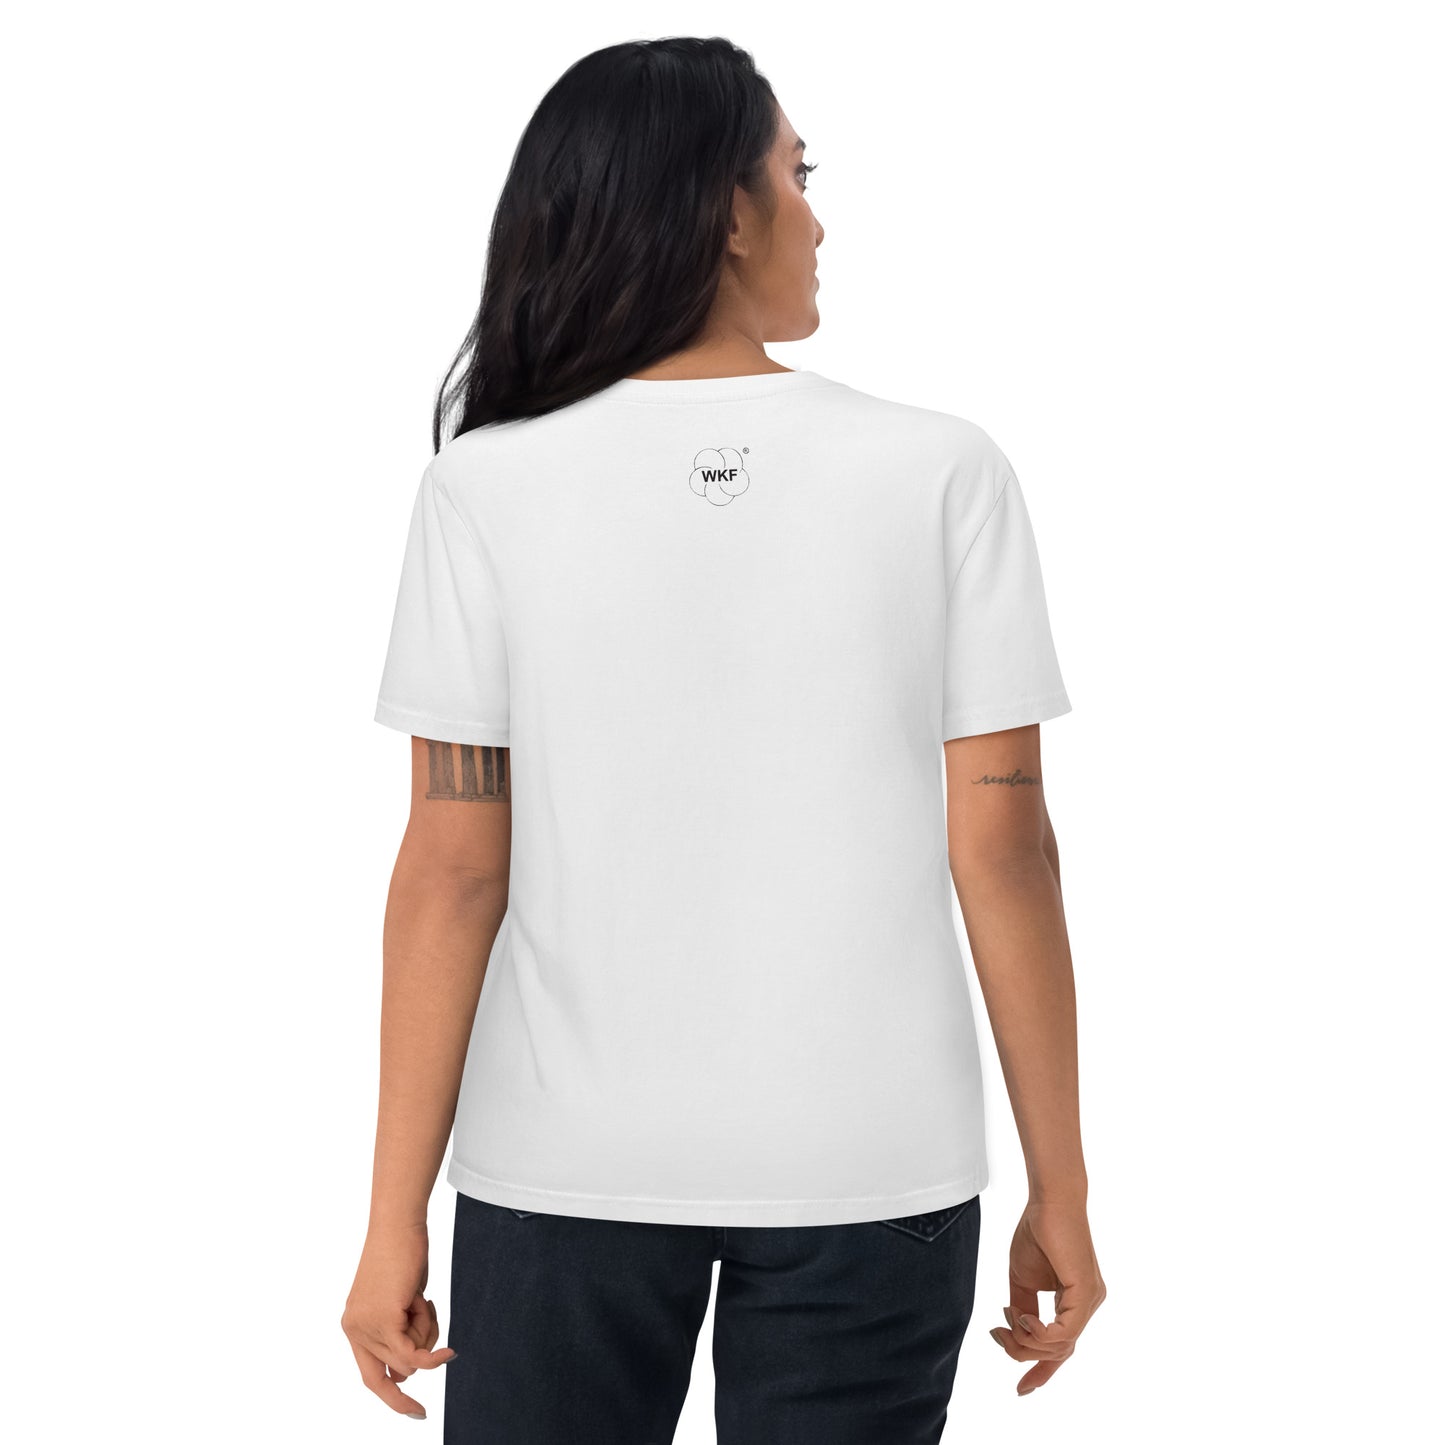 World Karate Federation - Karate For Life - WHITE Adult Unisex organic cotton t-shirt